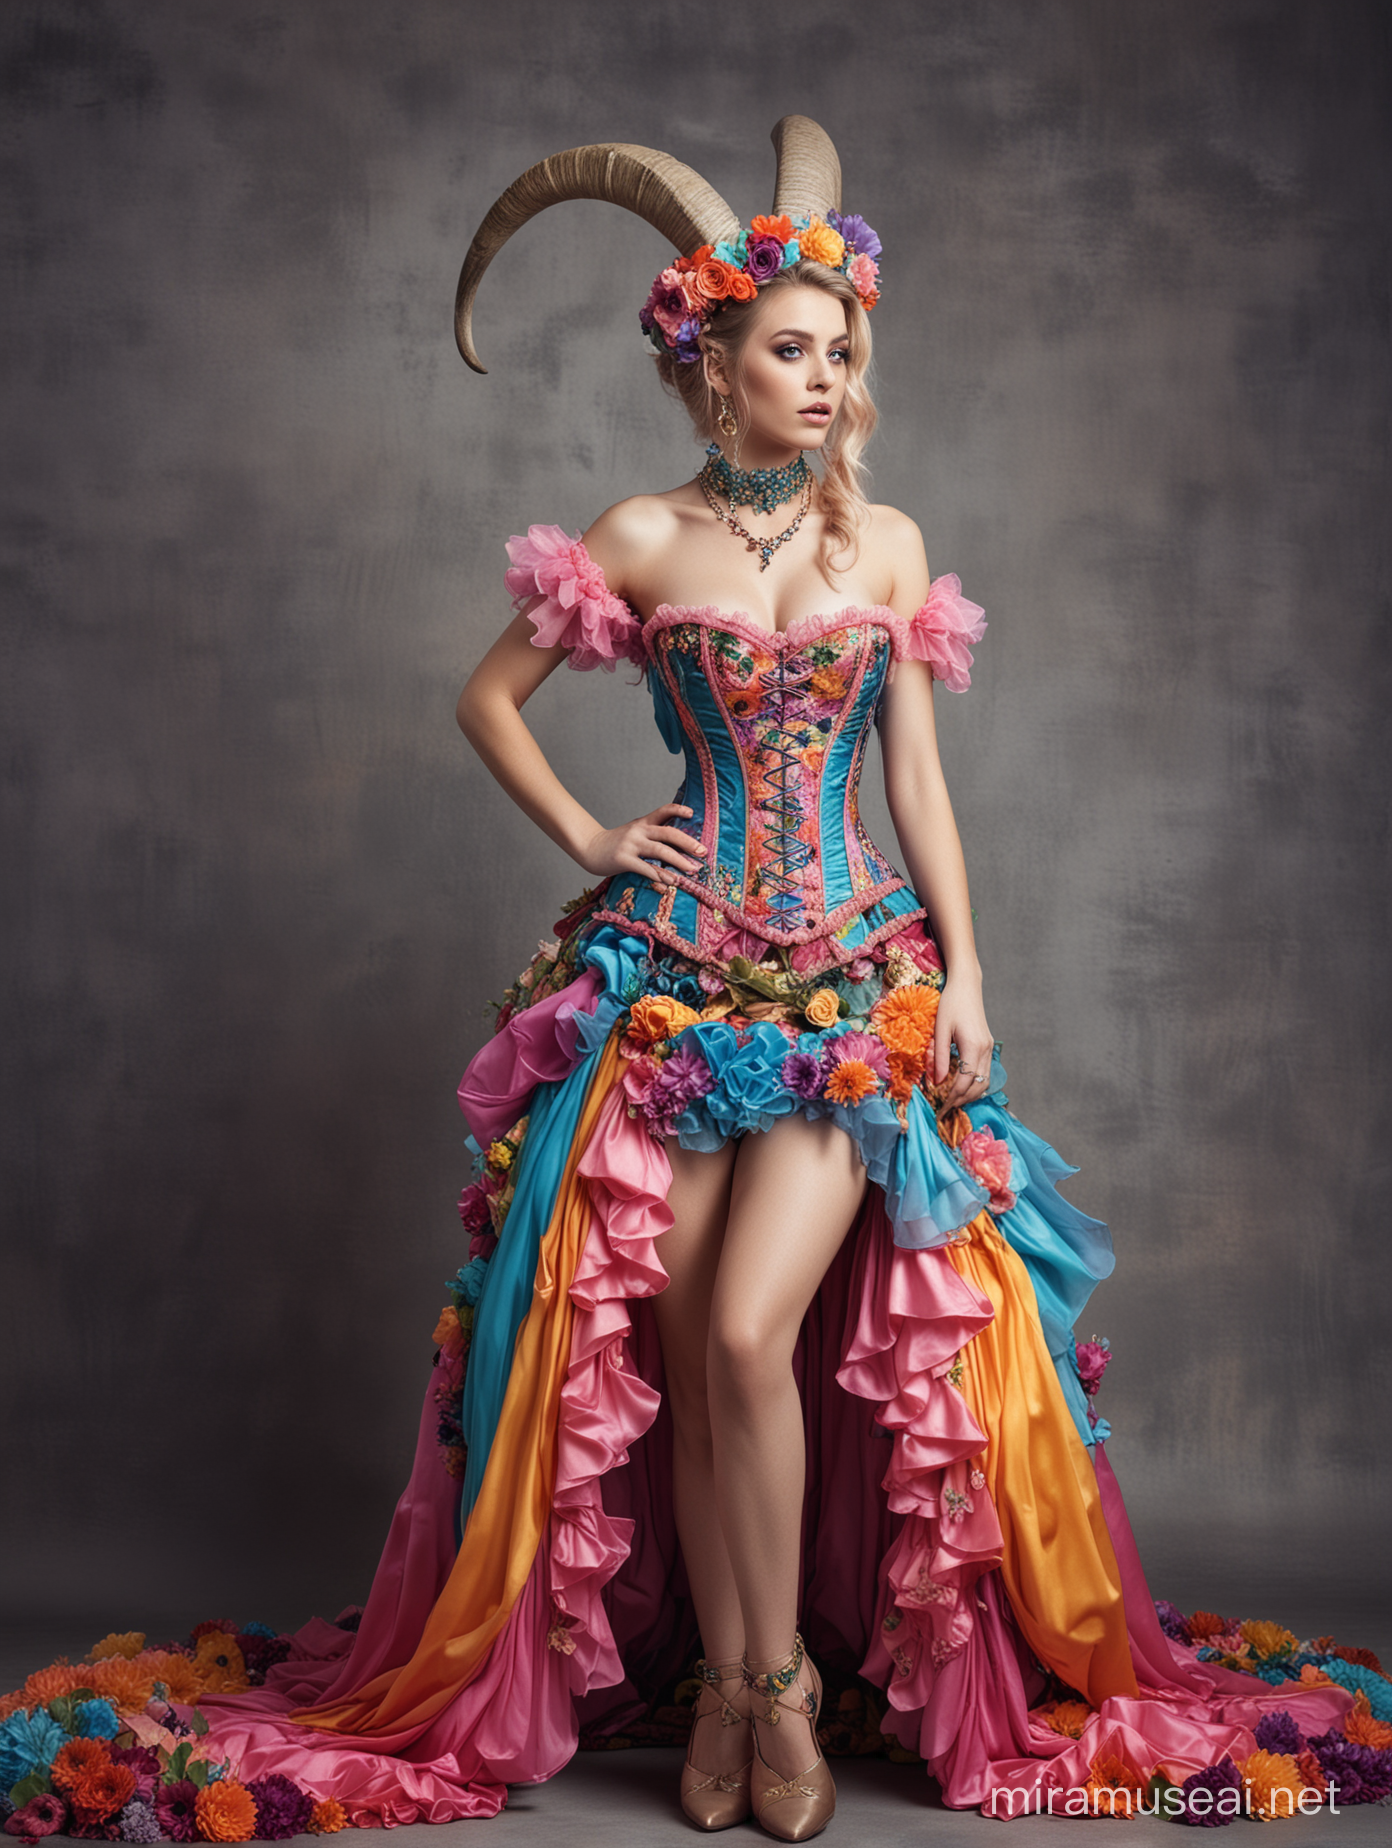 Enchanting HalfHuman HalfGoat Woman in Vibrant Corset Dress with Ram Horns and Floral Adornments